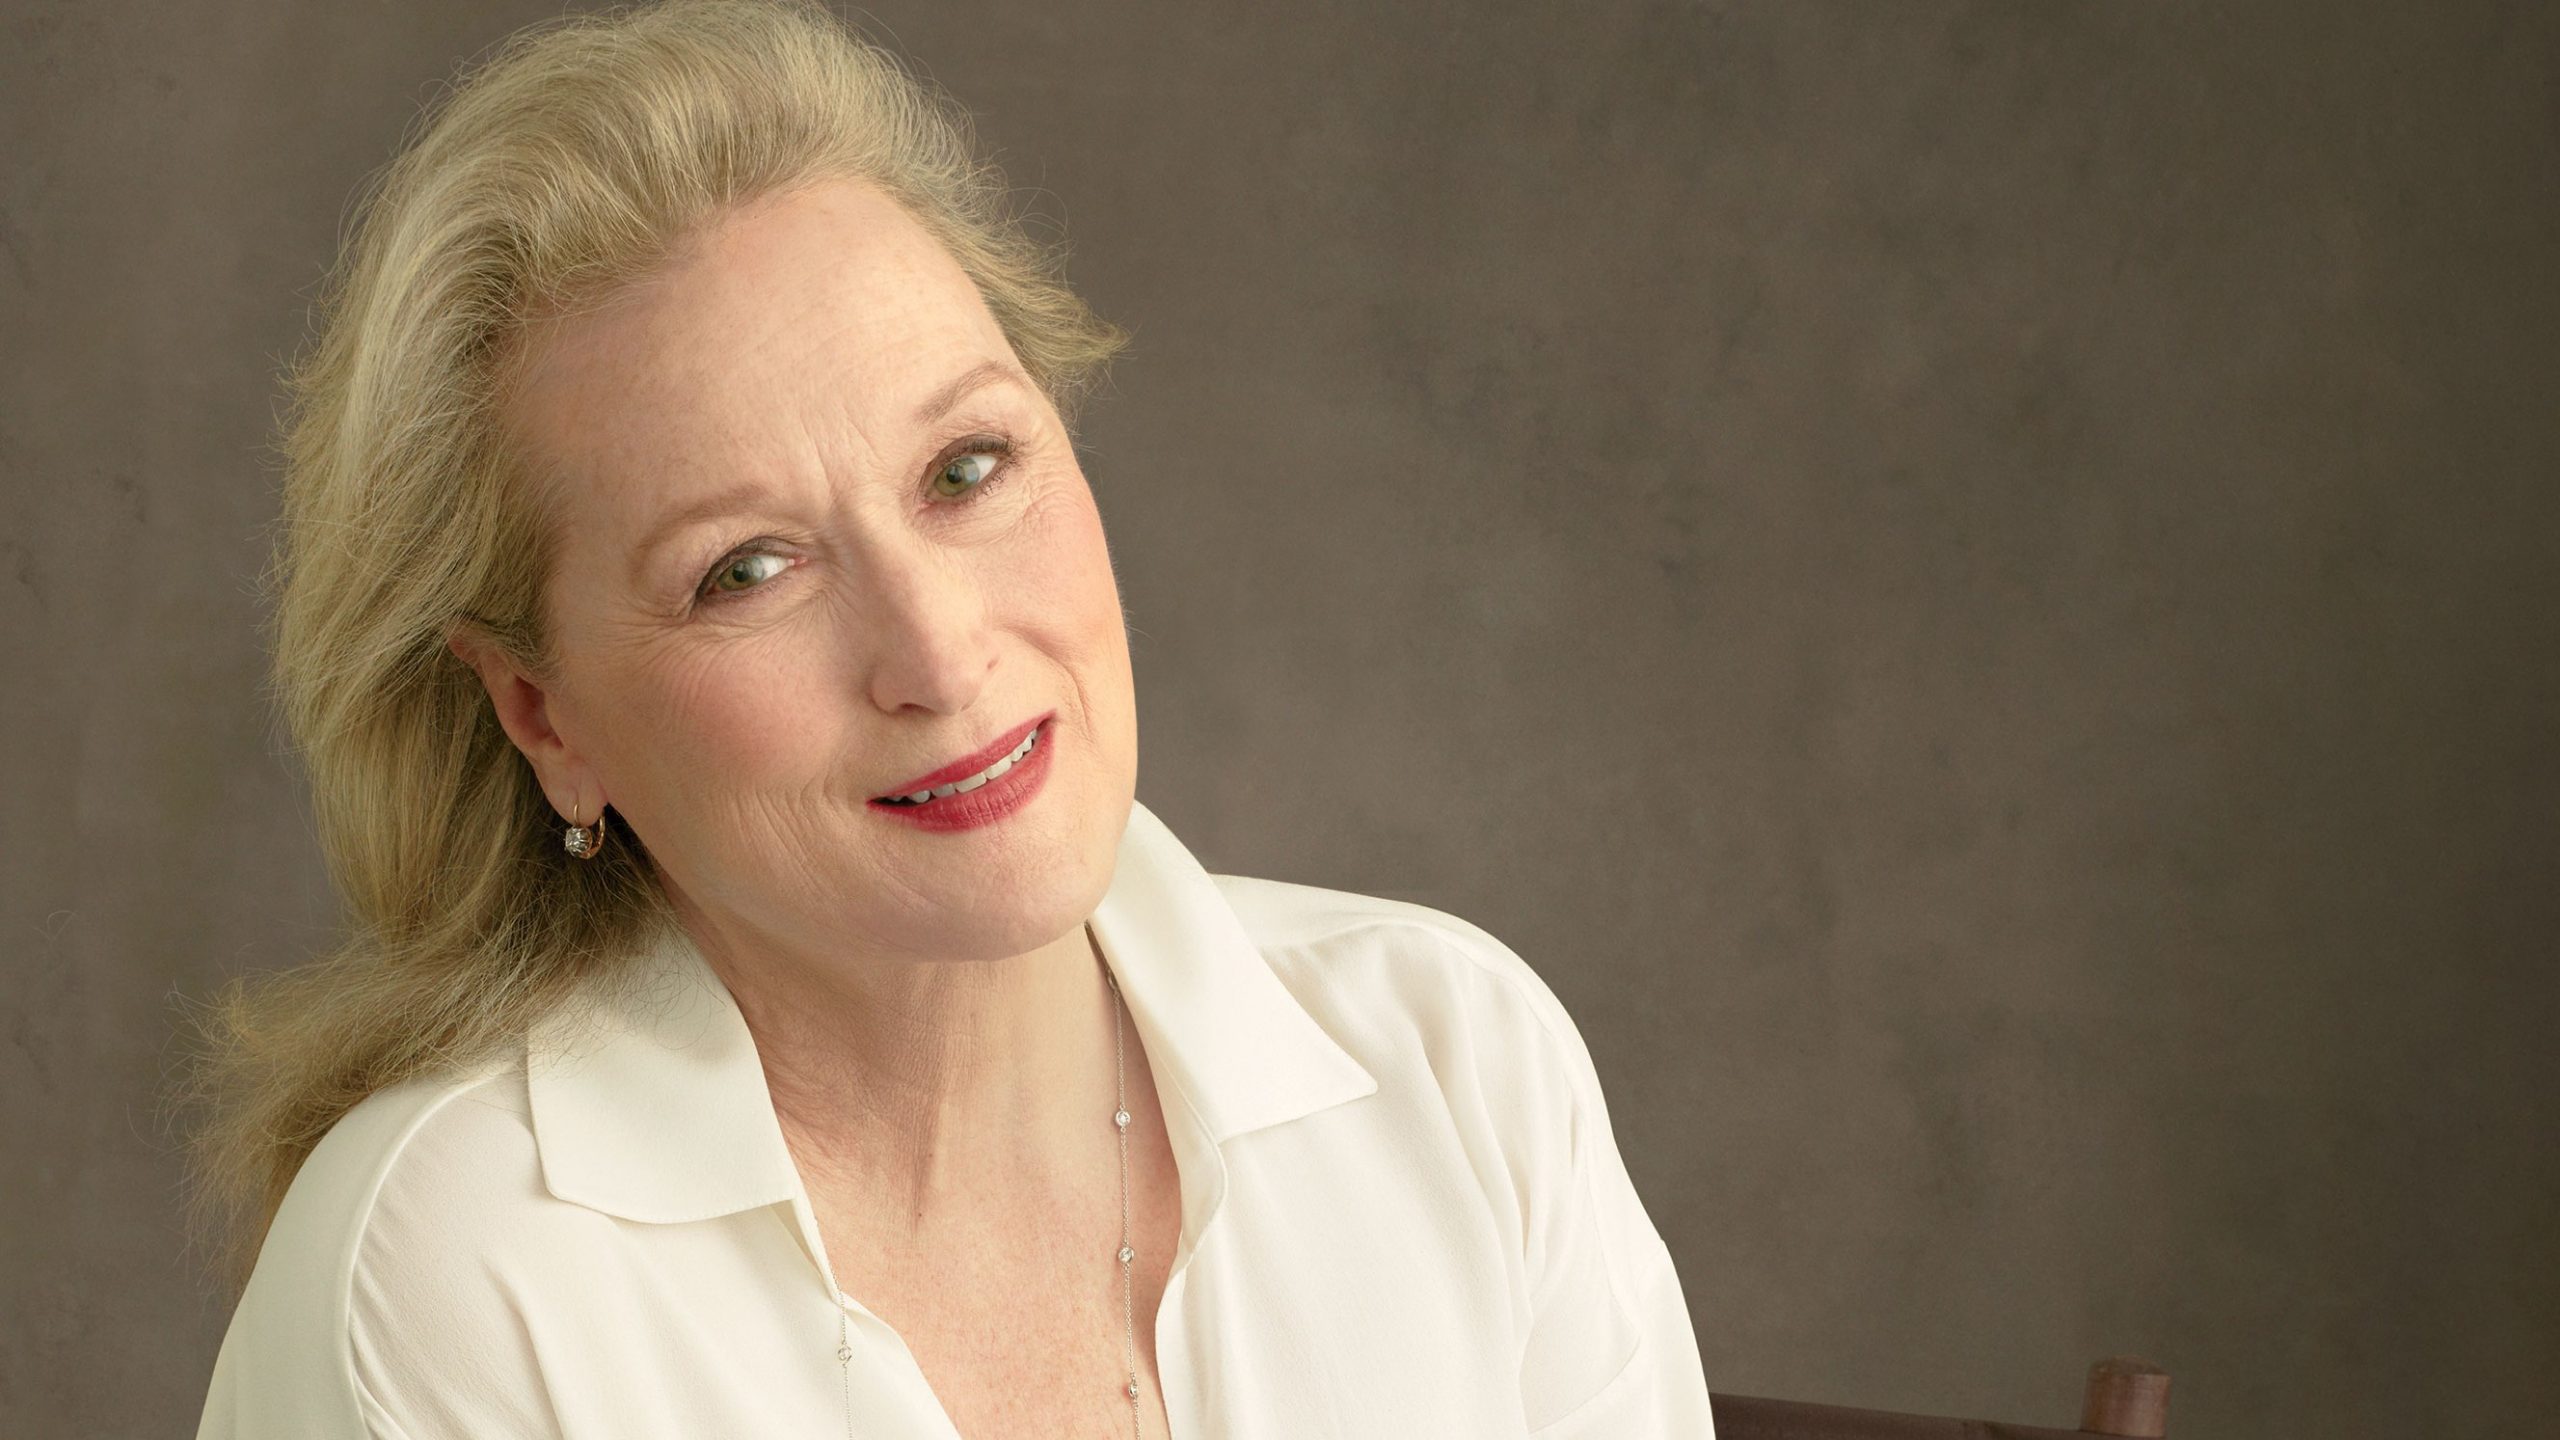 Meryl Streep Net Worth And Complete Bio